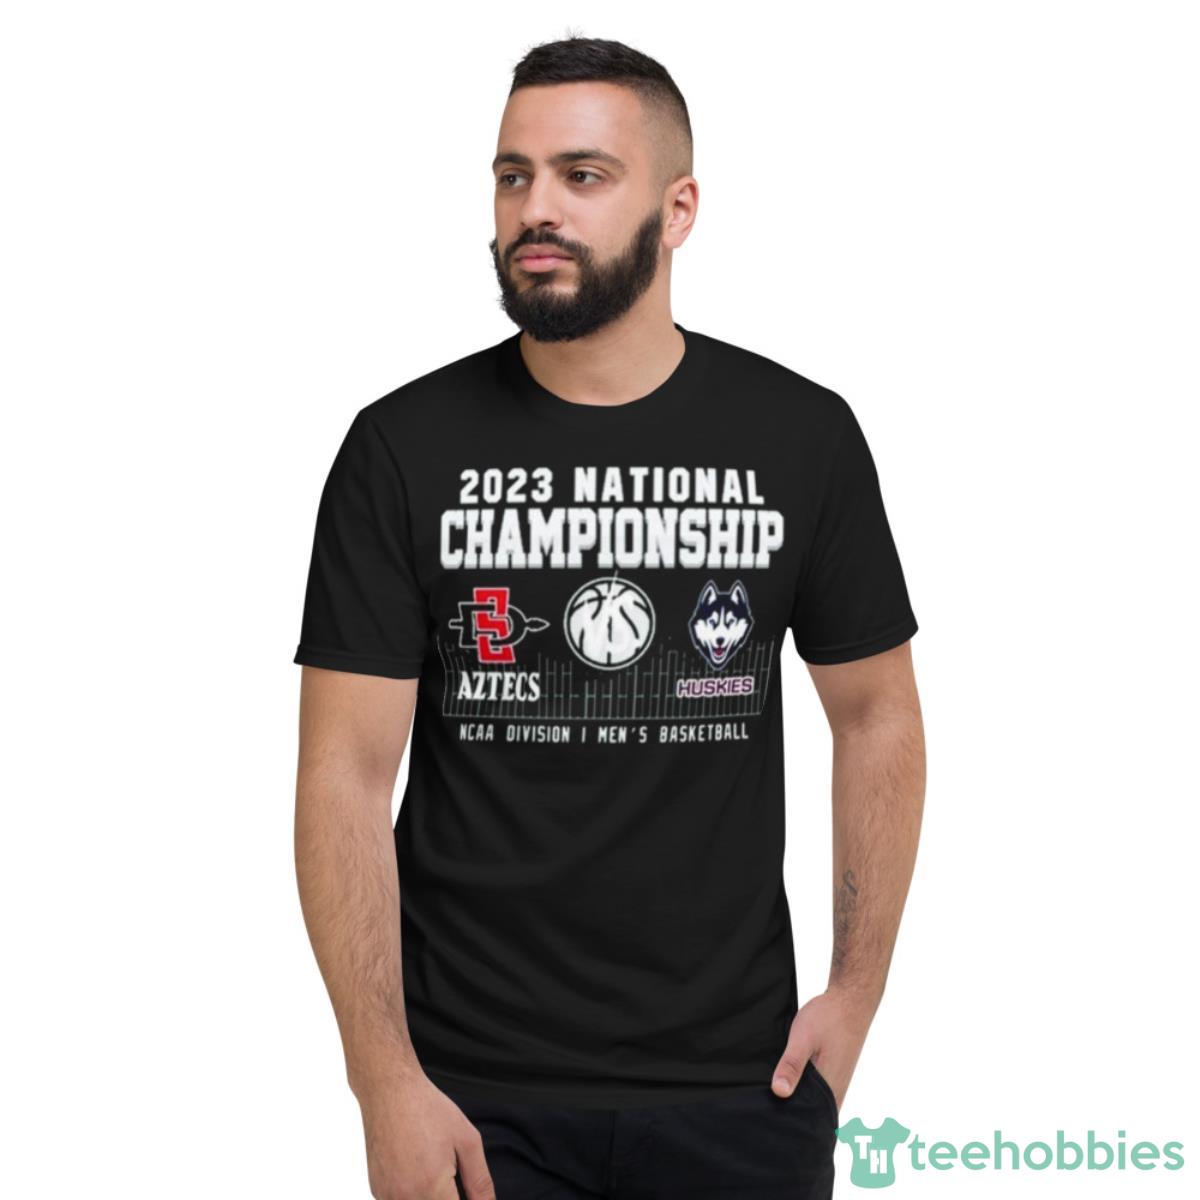 2023 National Championship Aztecs Huskies Ncaa Division I Men’s Basketball Shirt Product Photo 2